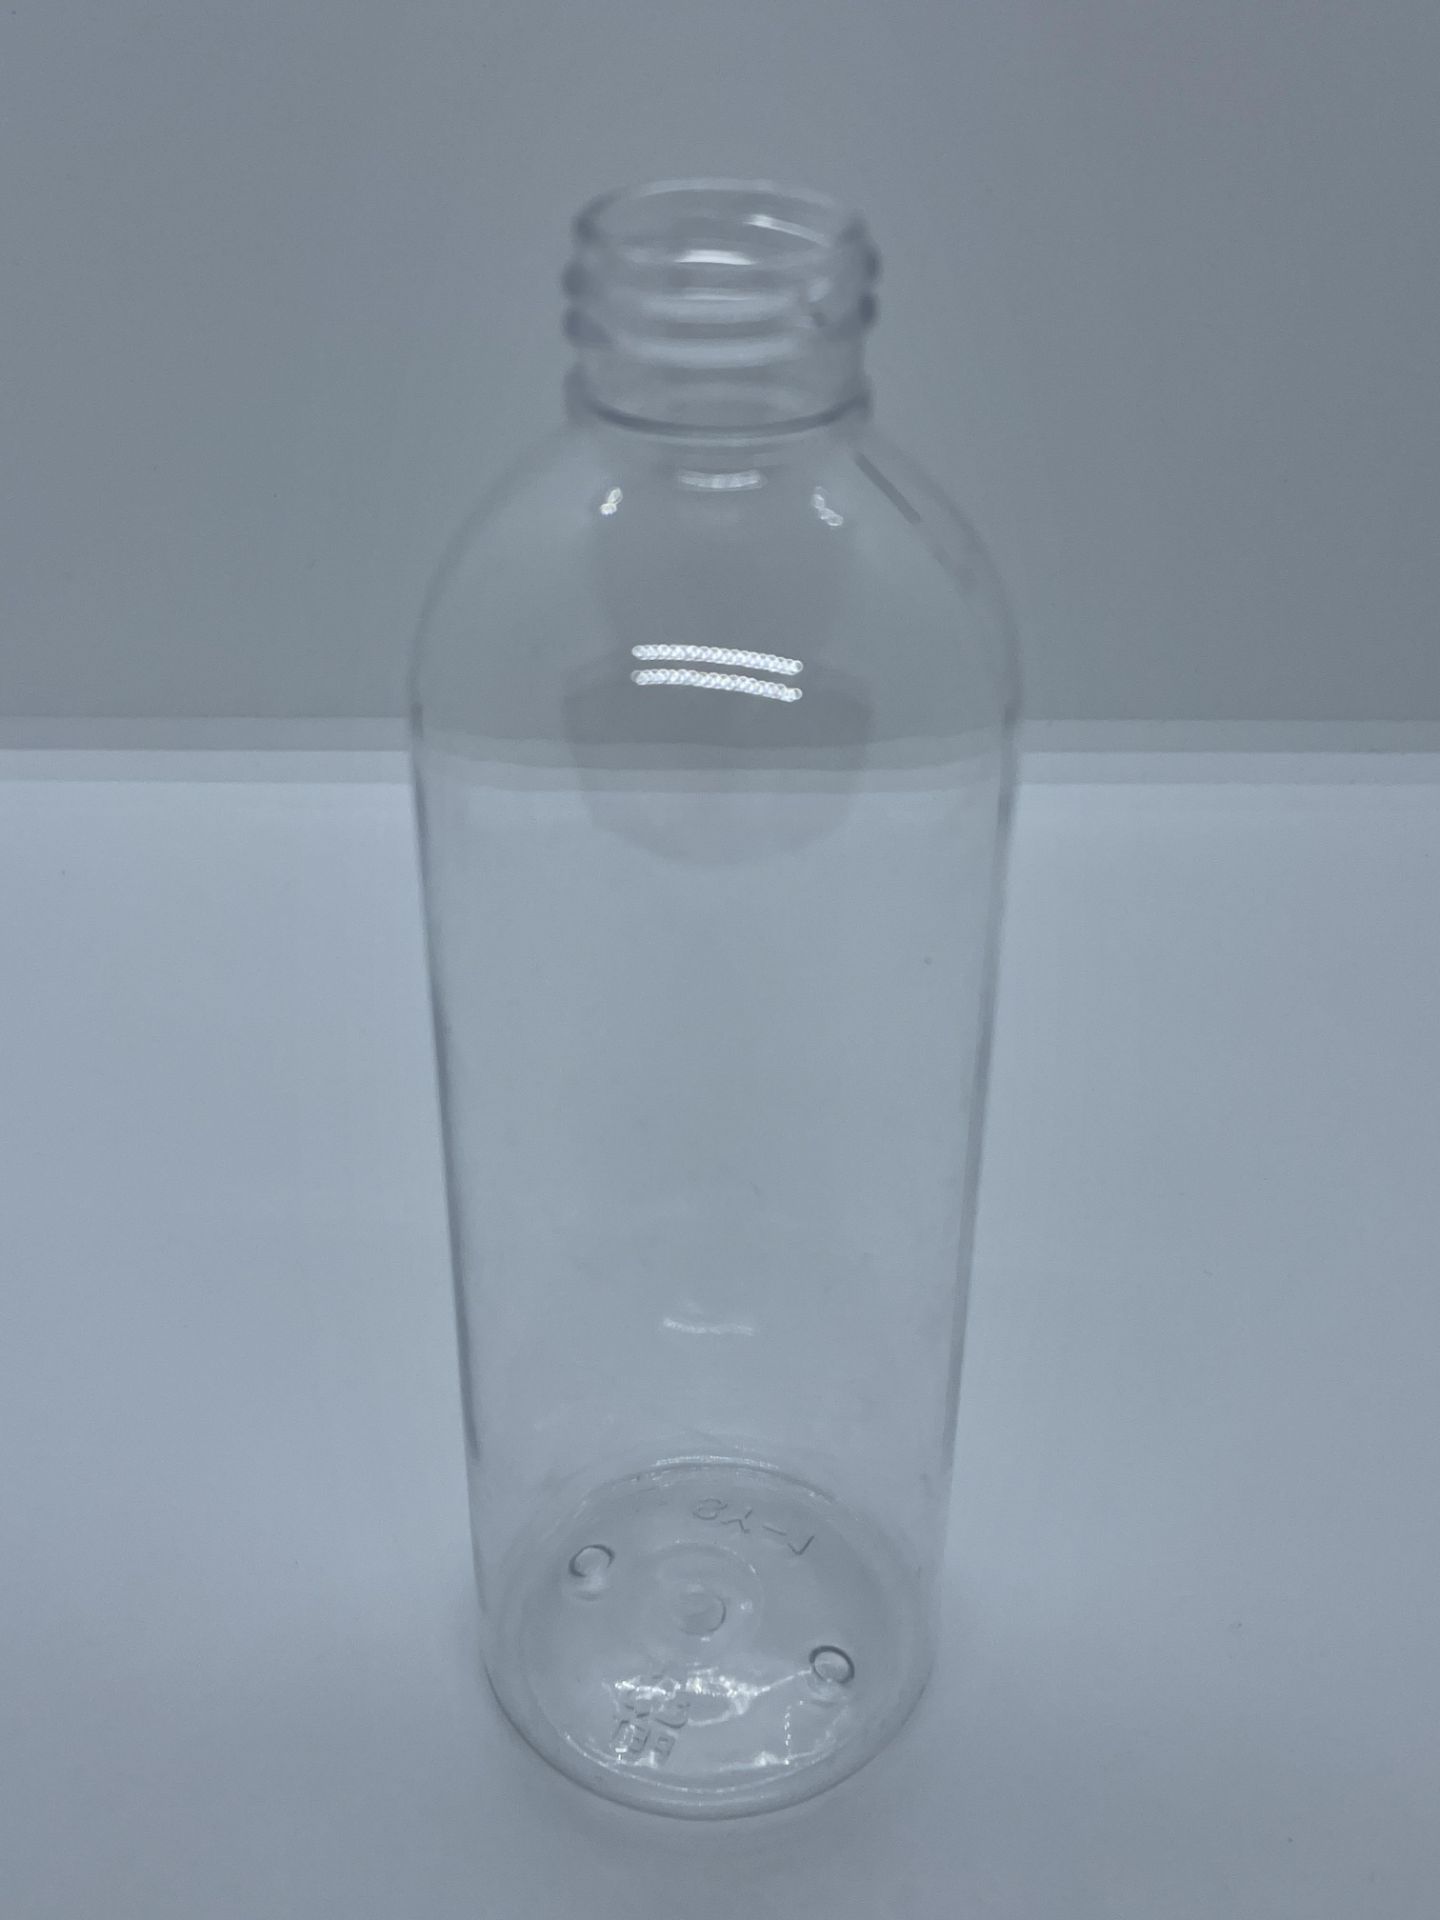 75,000 - Clear Plastic Bullet 8 oz Empty Bottles, 24-410 Threading Neck, 6.25" Tall, 2" Diameter - Image 2 of 5